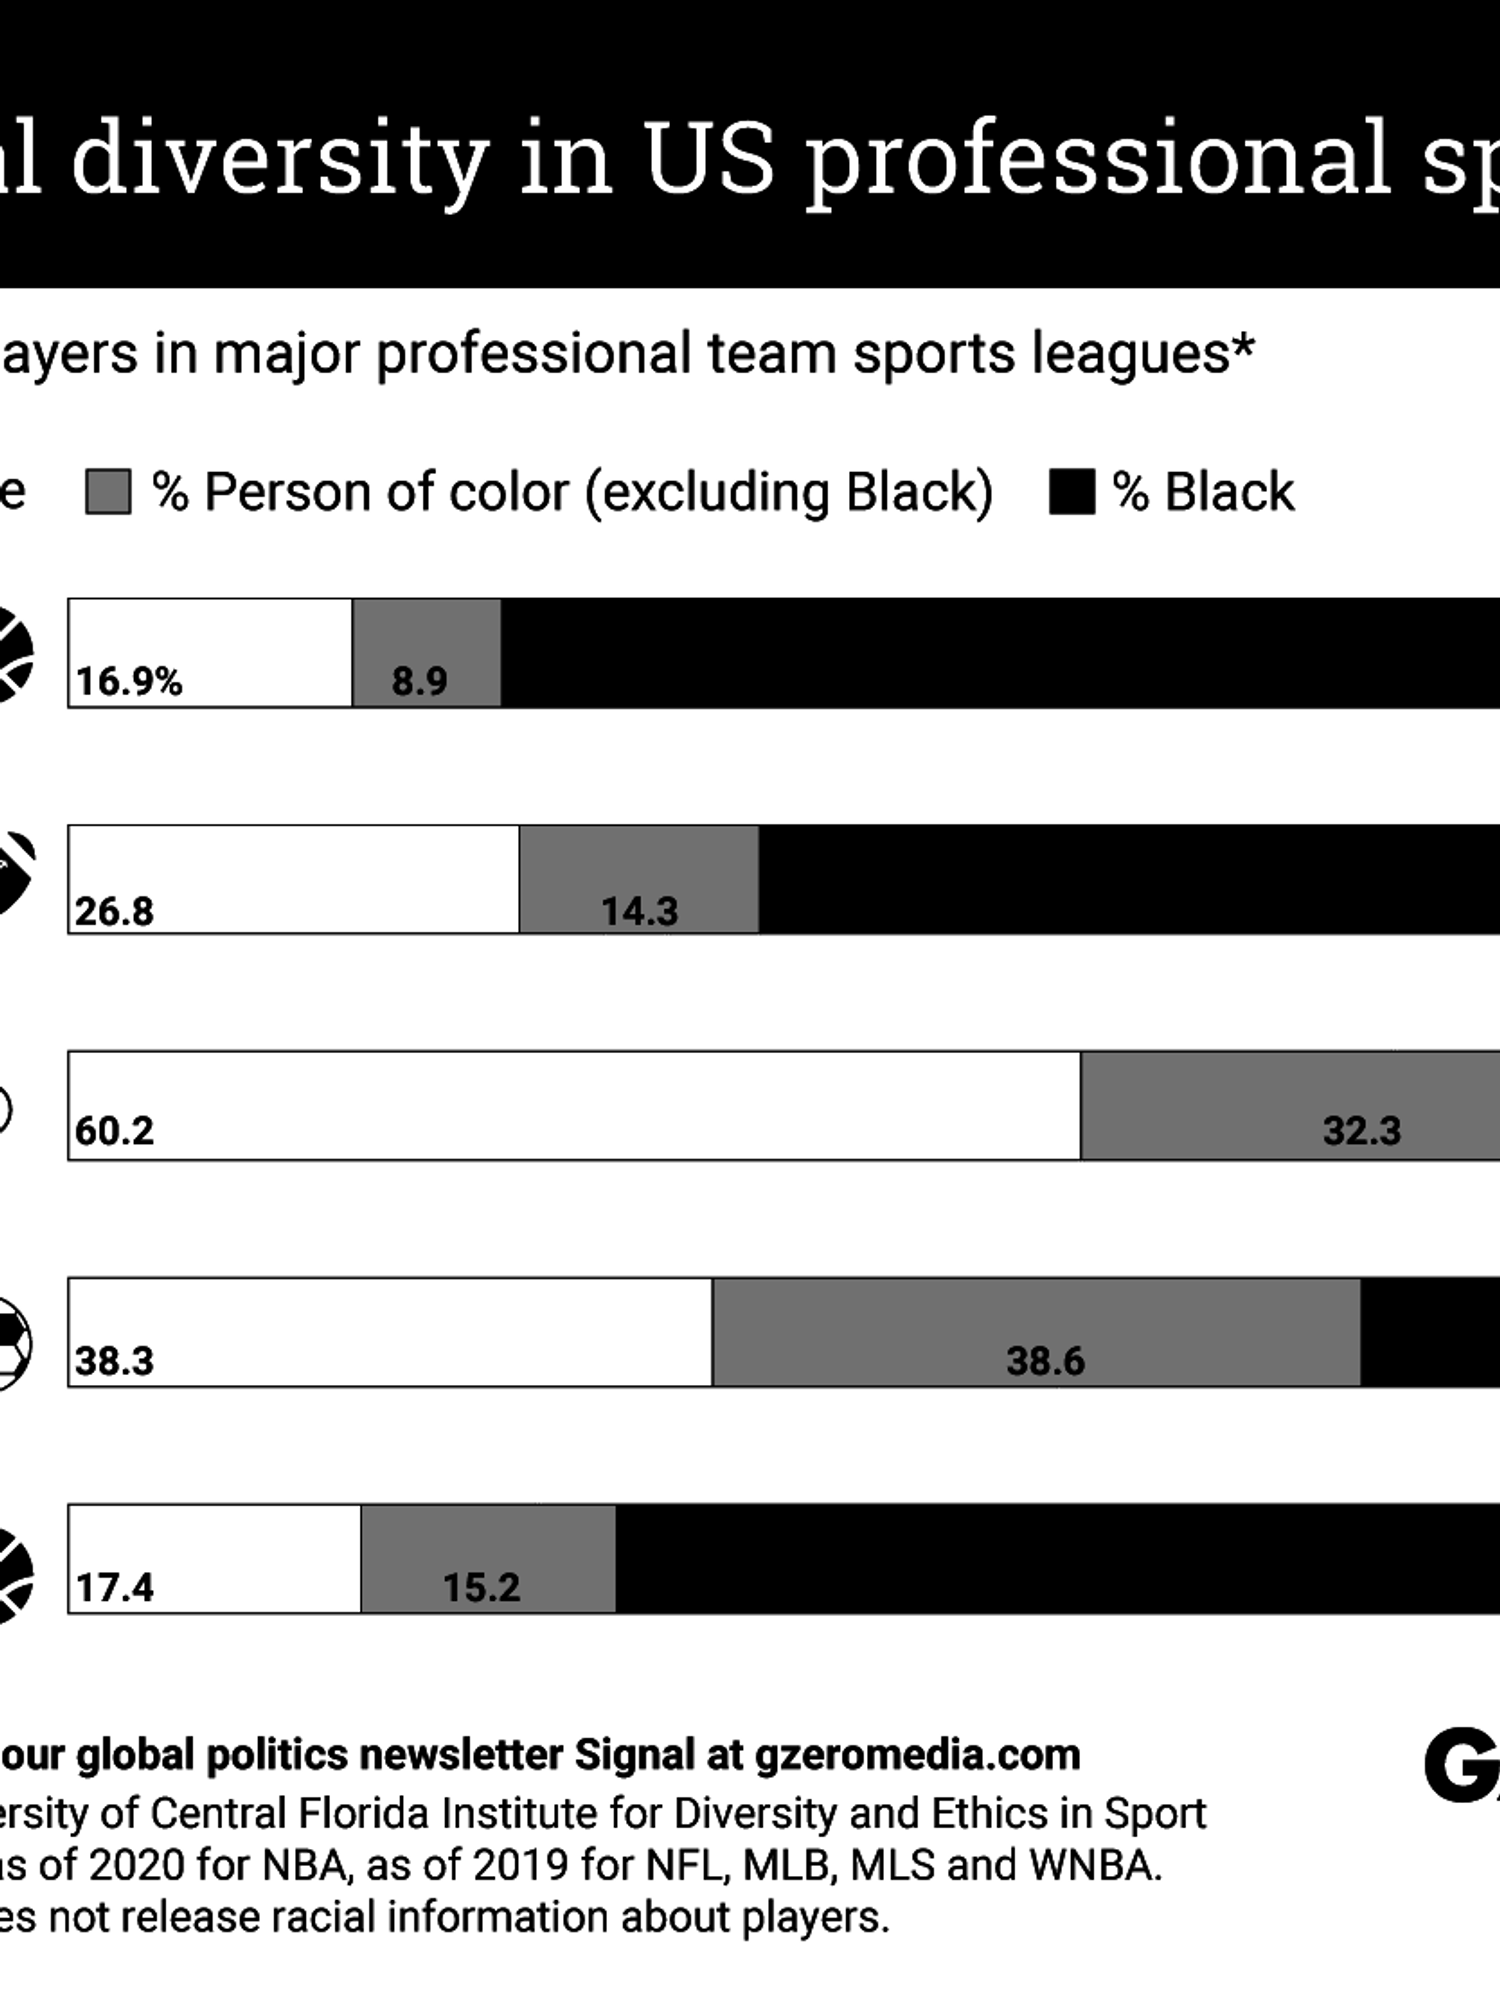 MLB Demographics: What percentage of MLB players are Black?